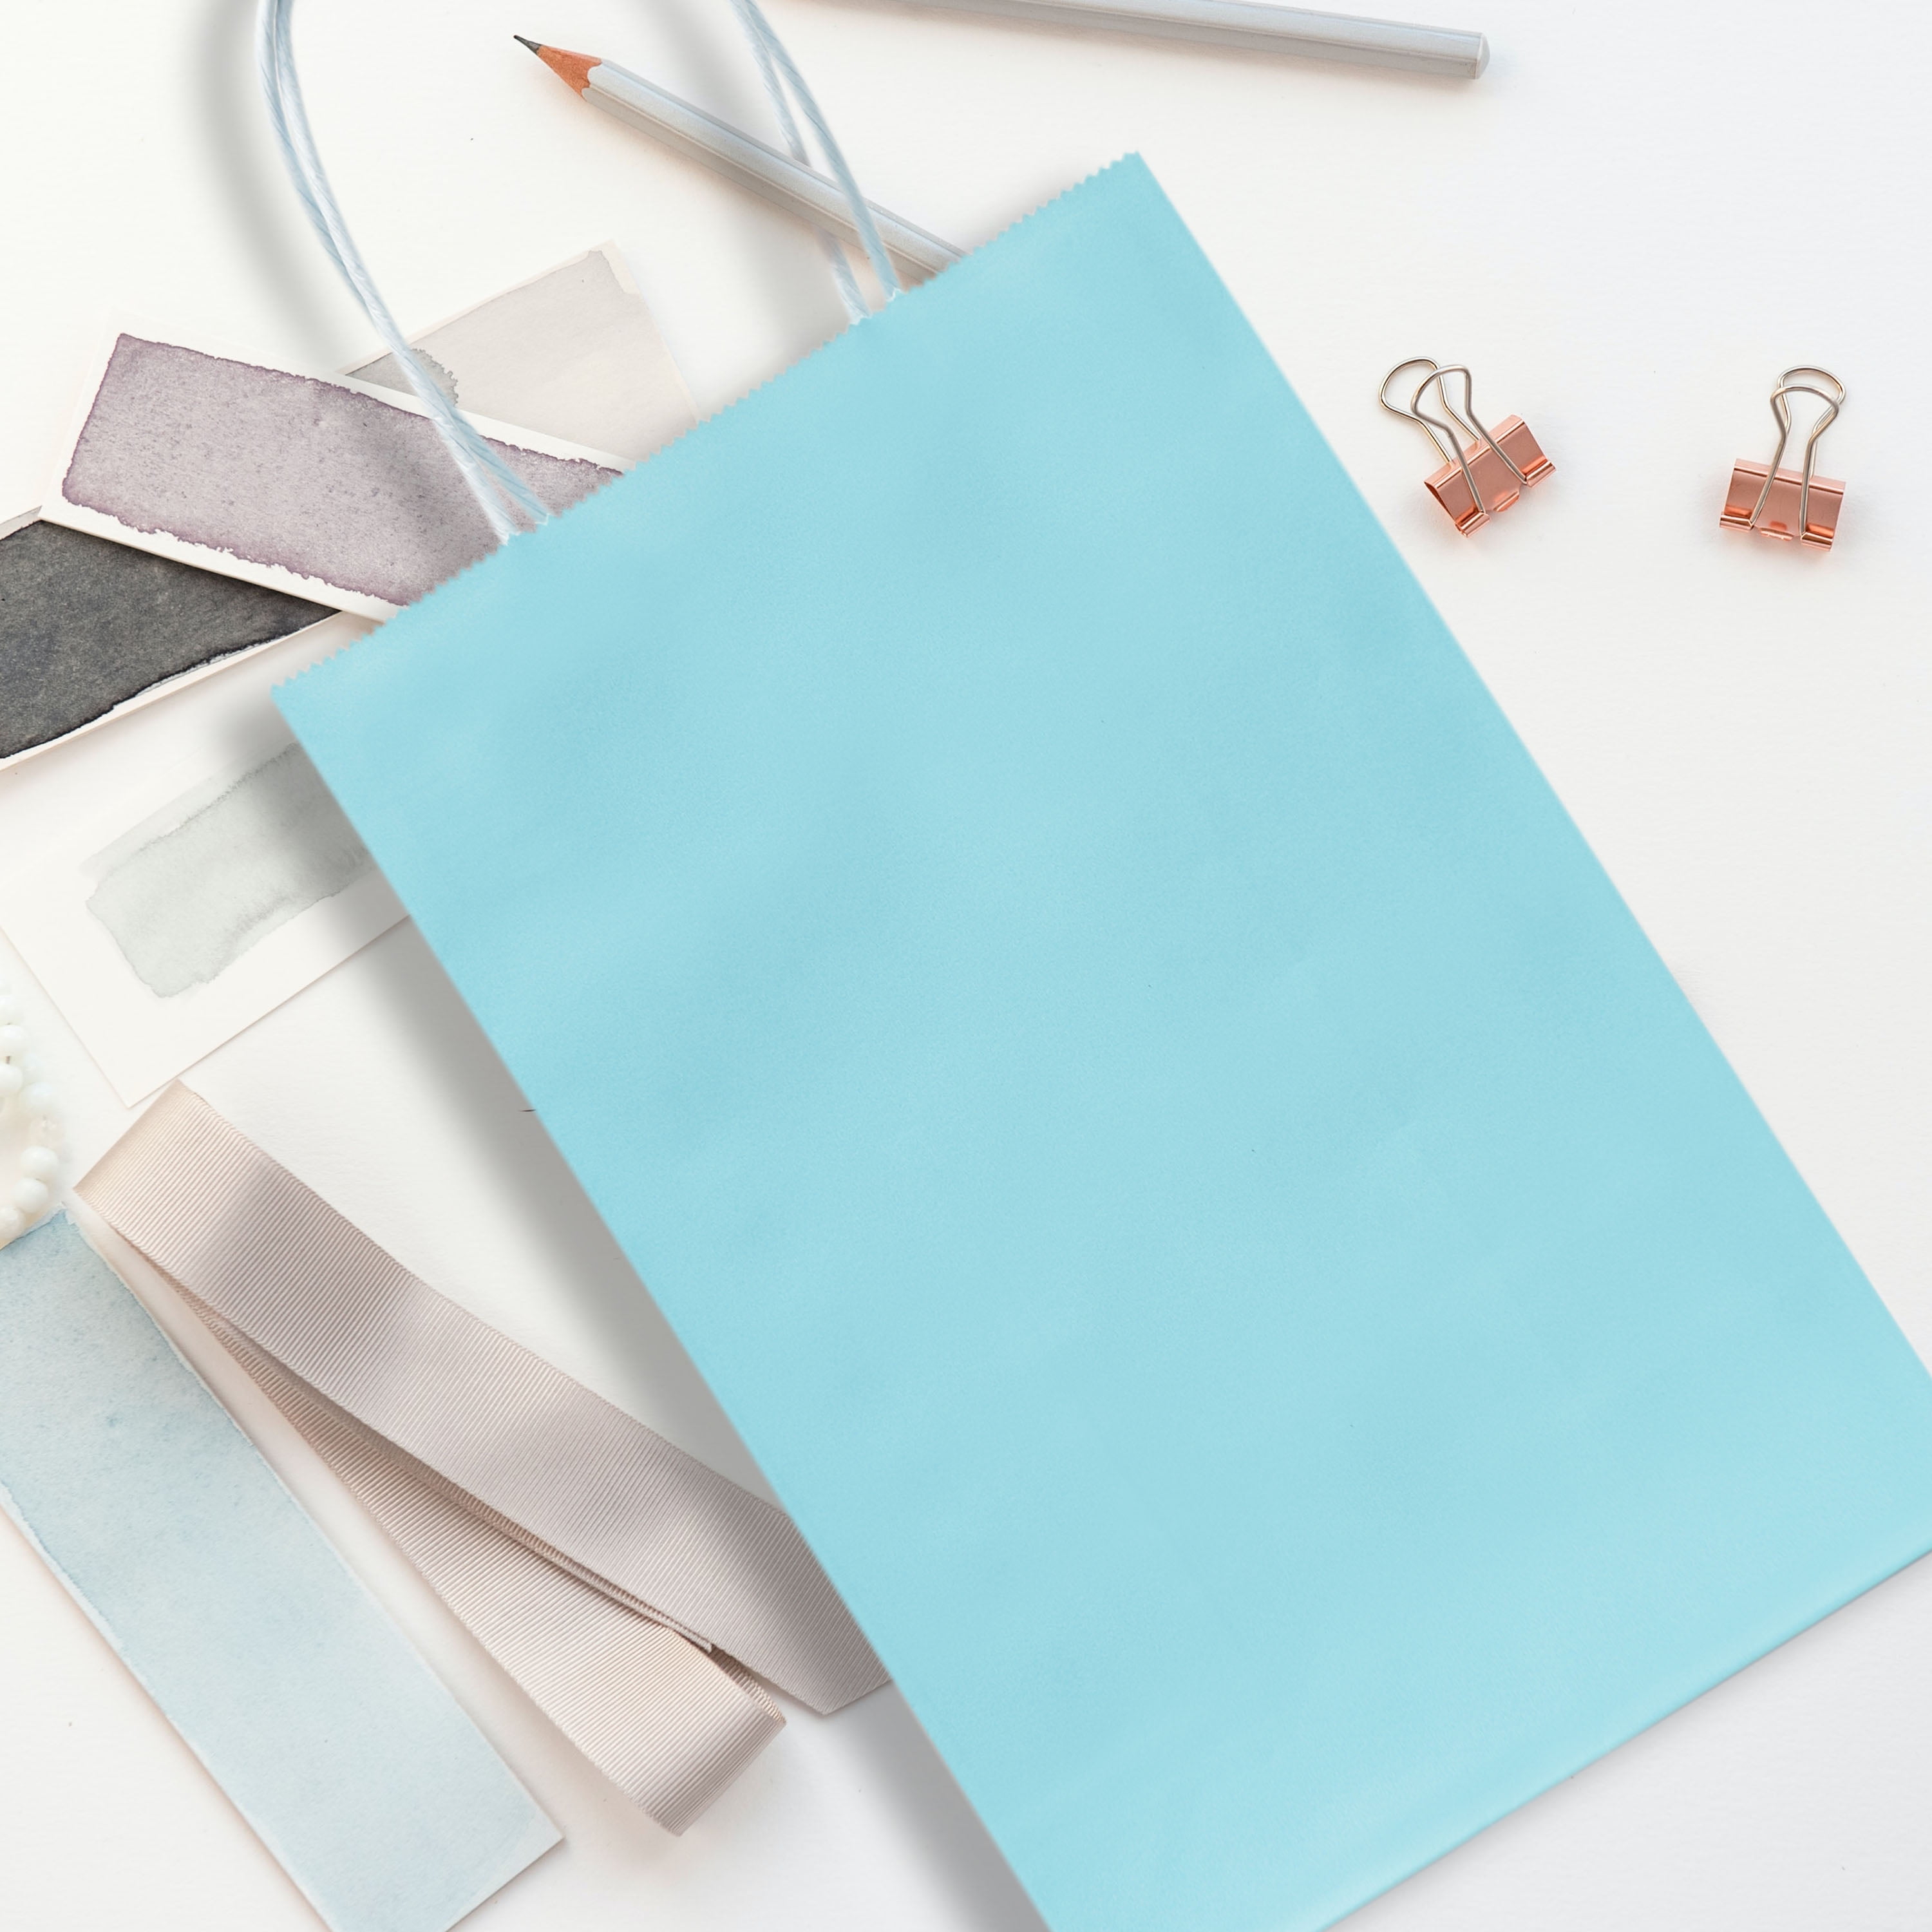 Berkley Shoppers Bag, Bay Blue, - Small Paper Gift Bag